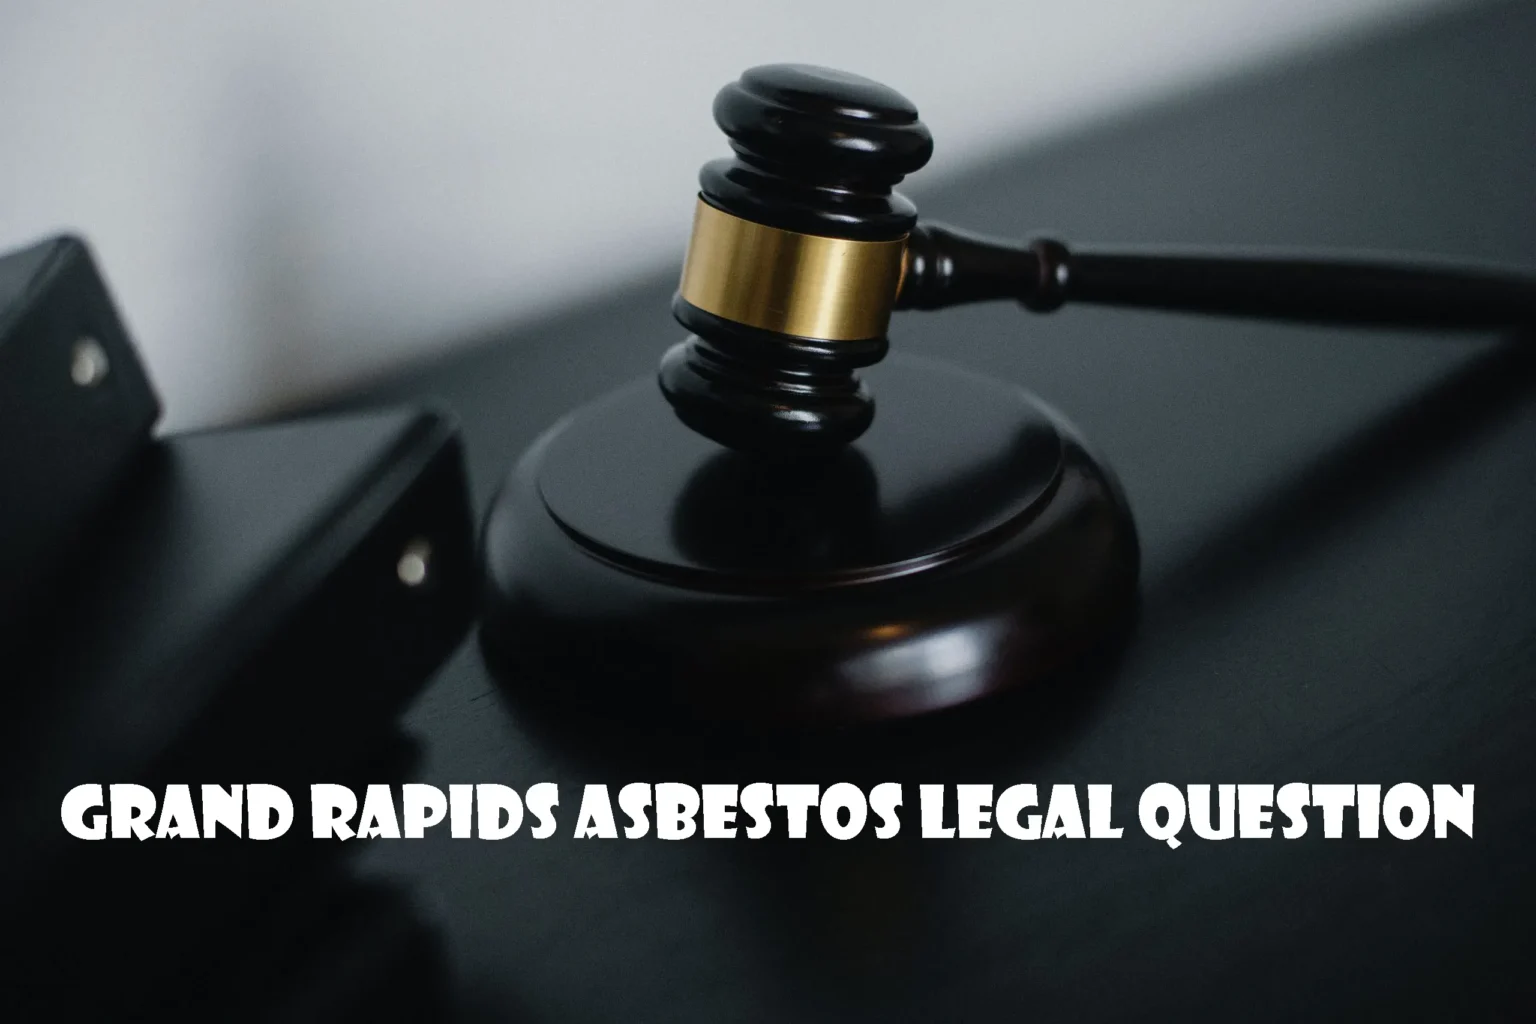 Grand Rapids Asbestos Legal Question